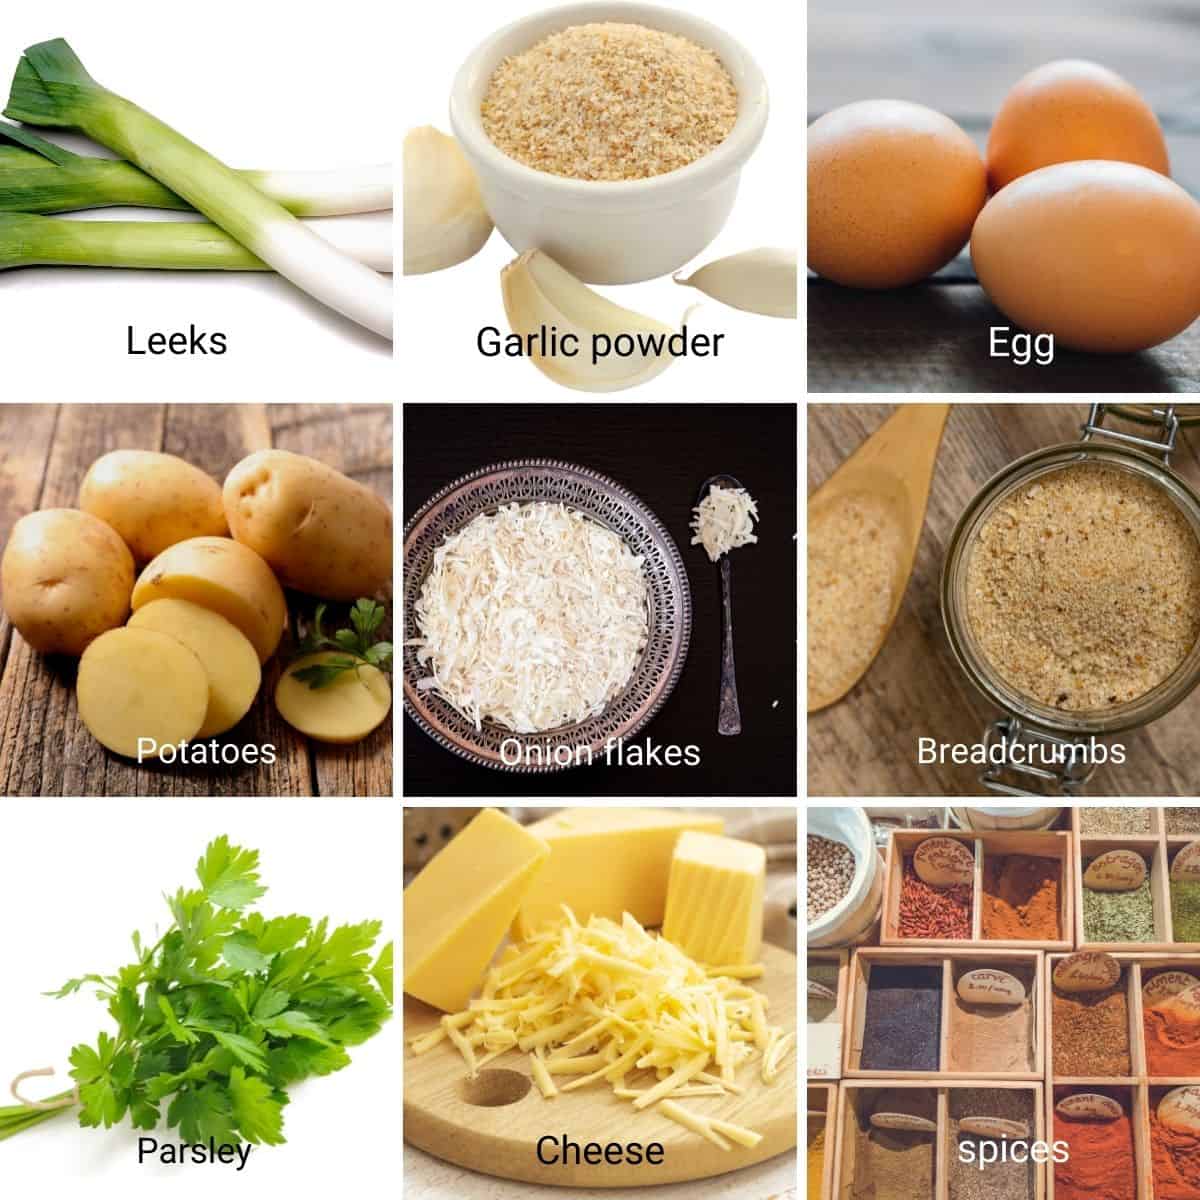 Ingredients for leek and potato patties.